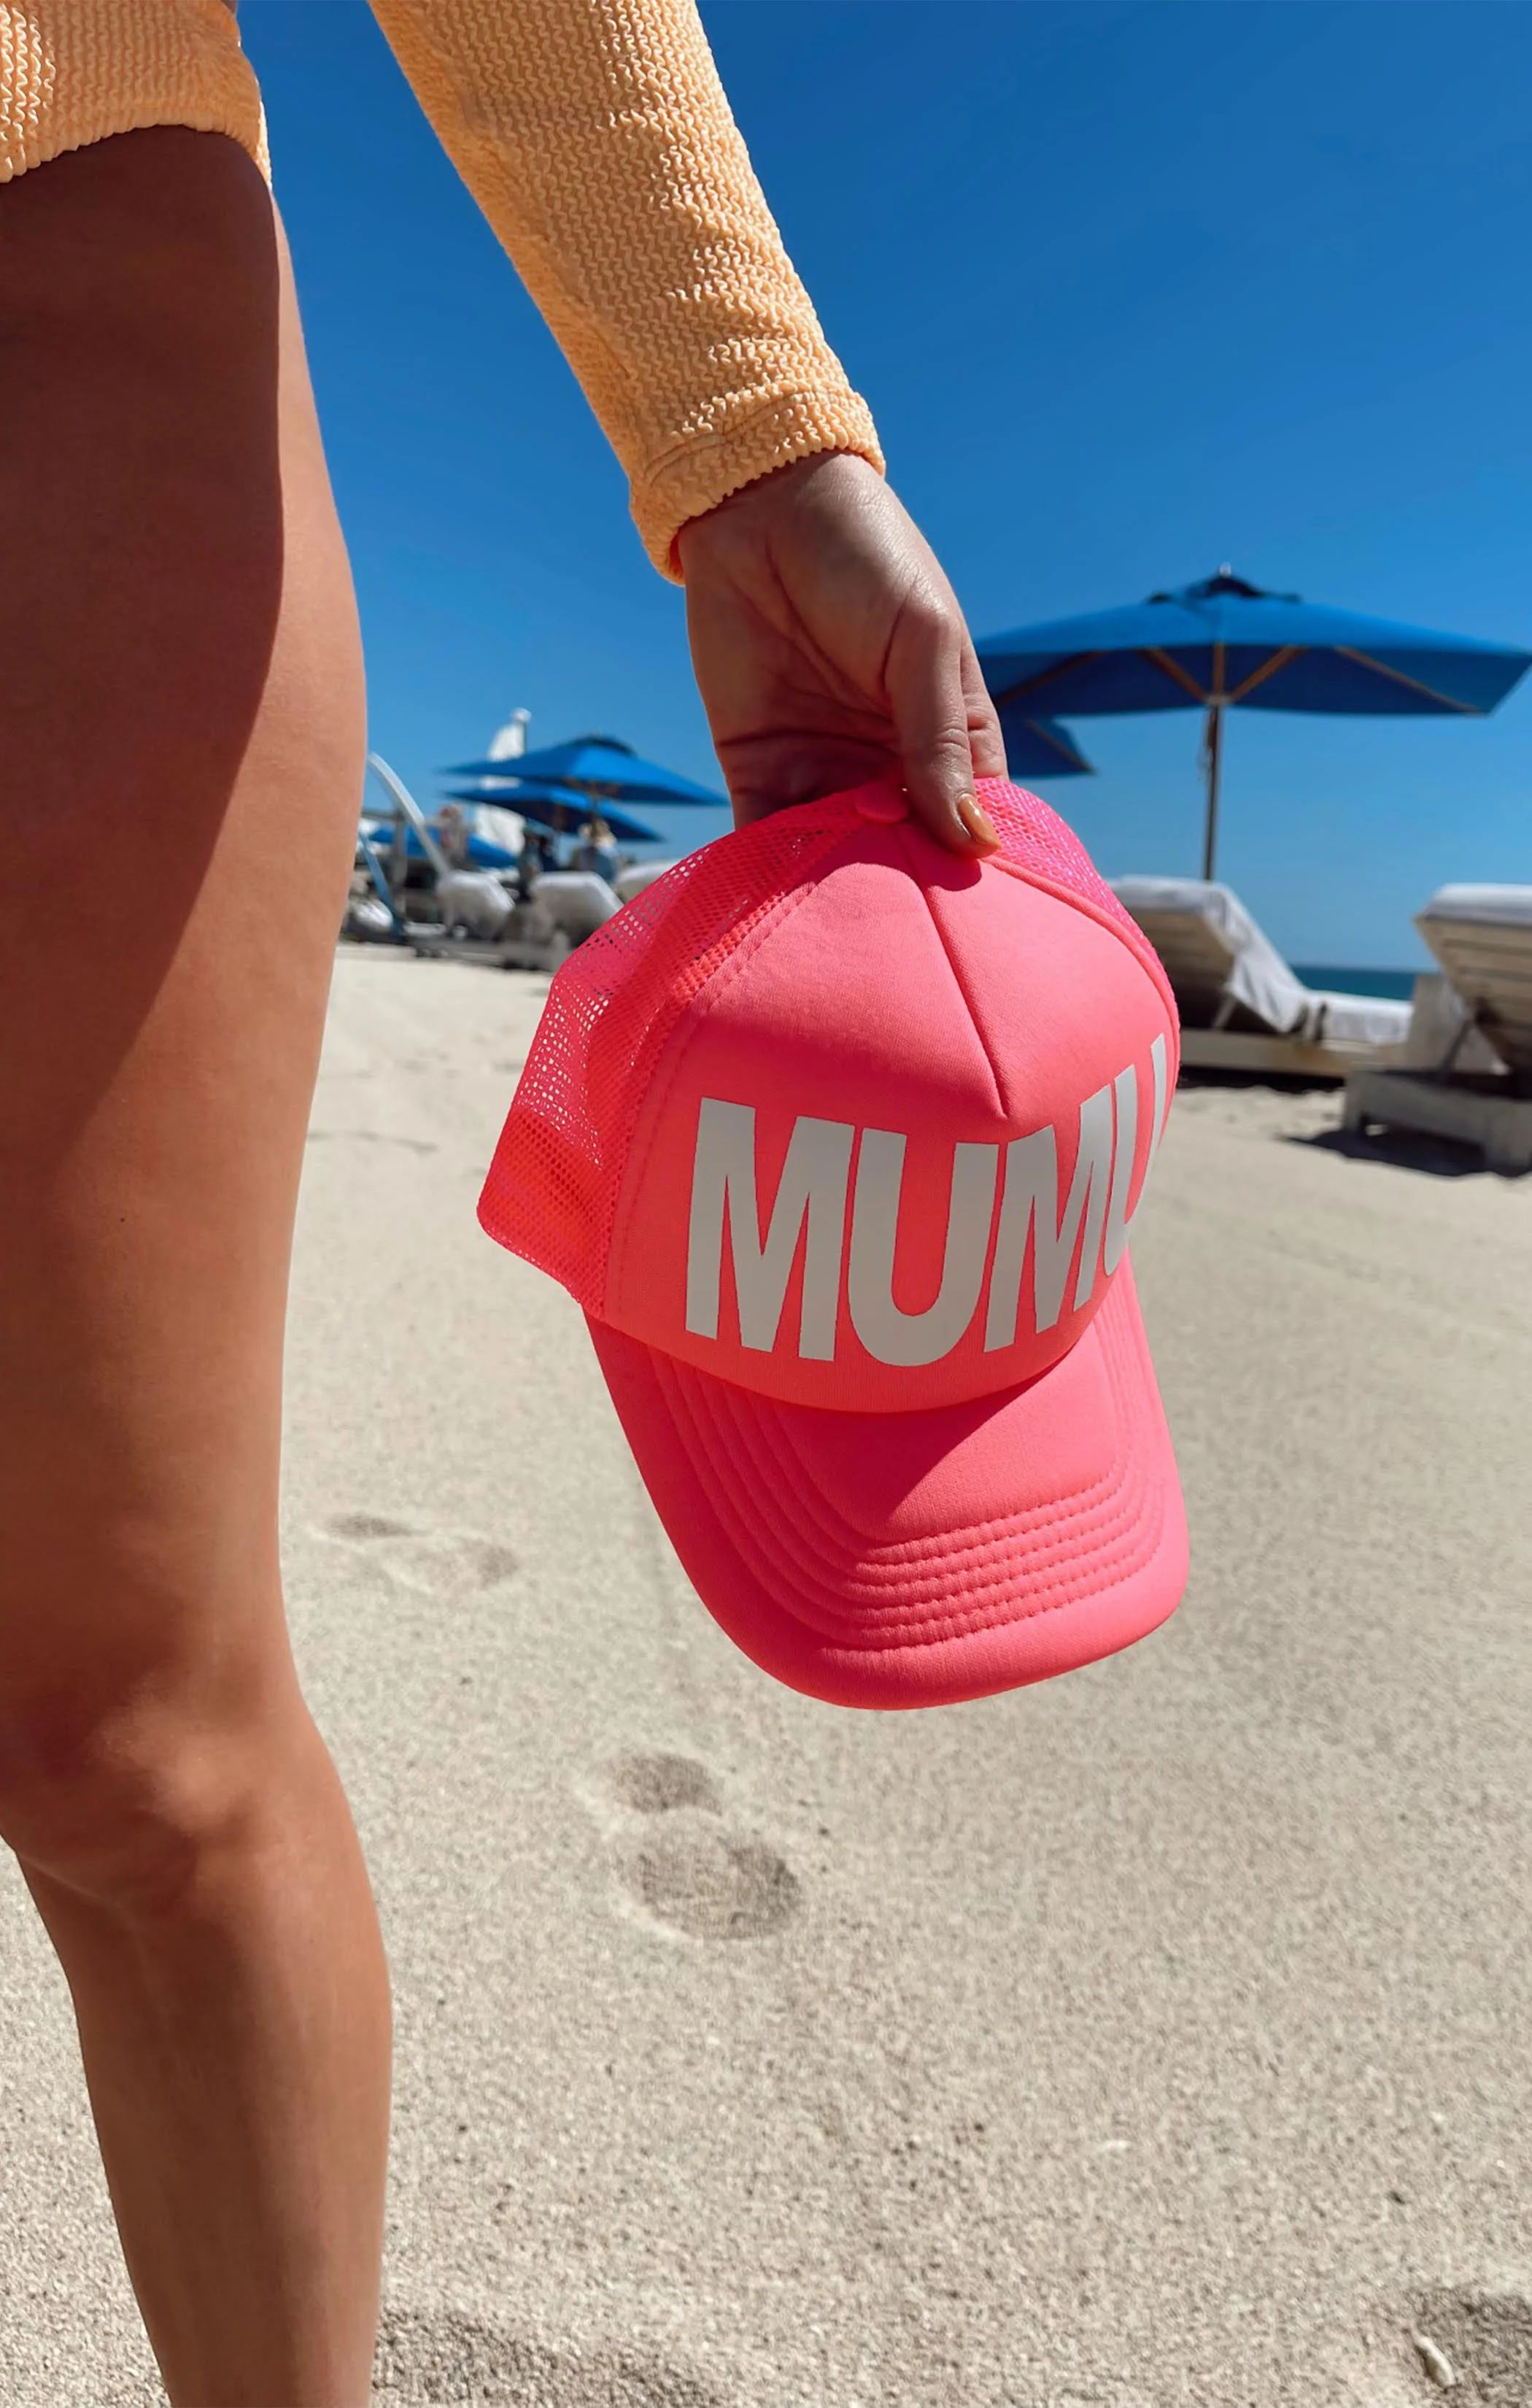 MUMU Trucker Hat | Show Me Your Mumu